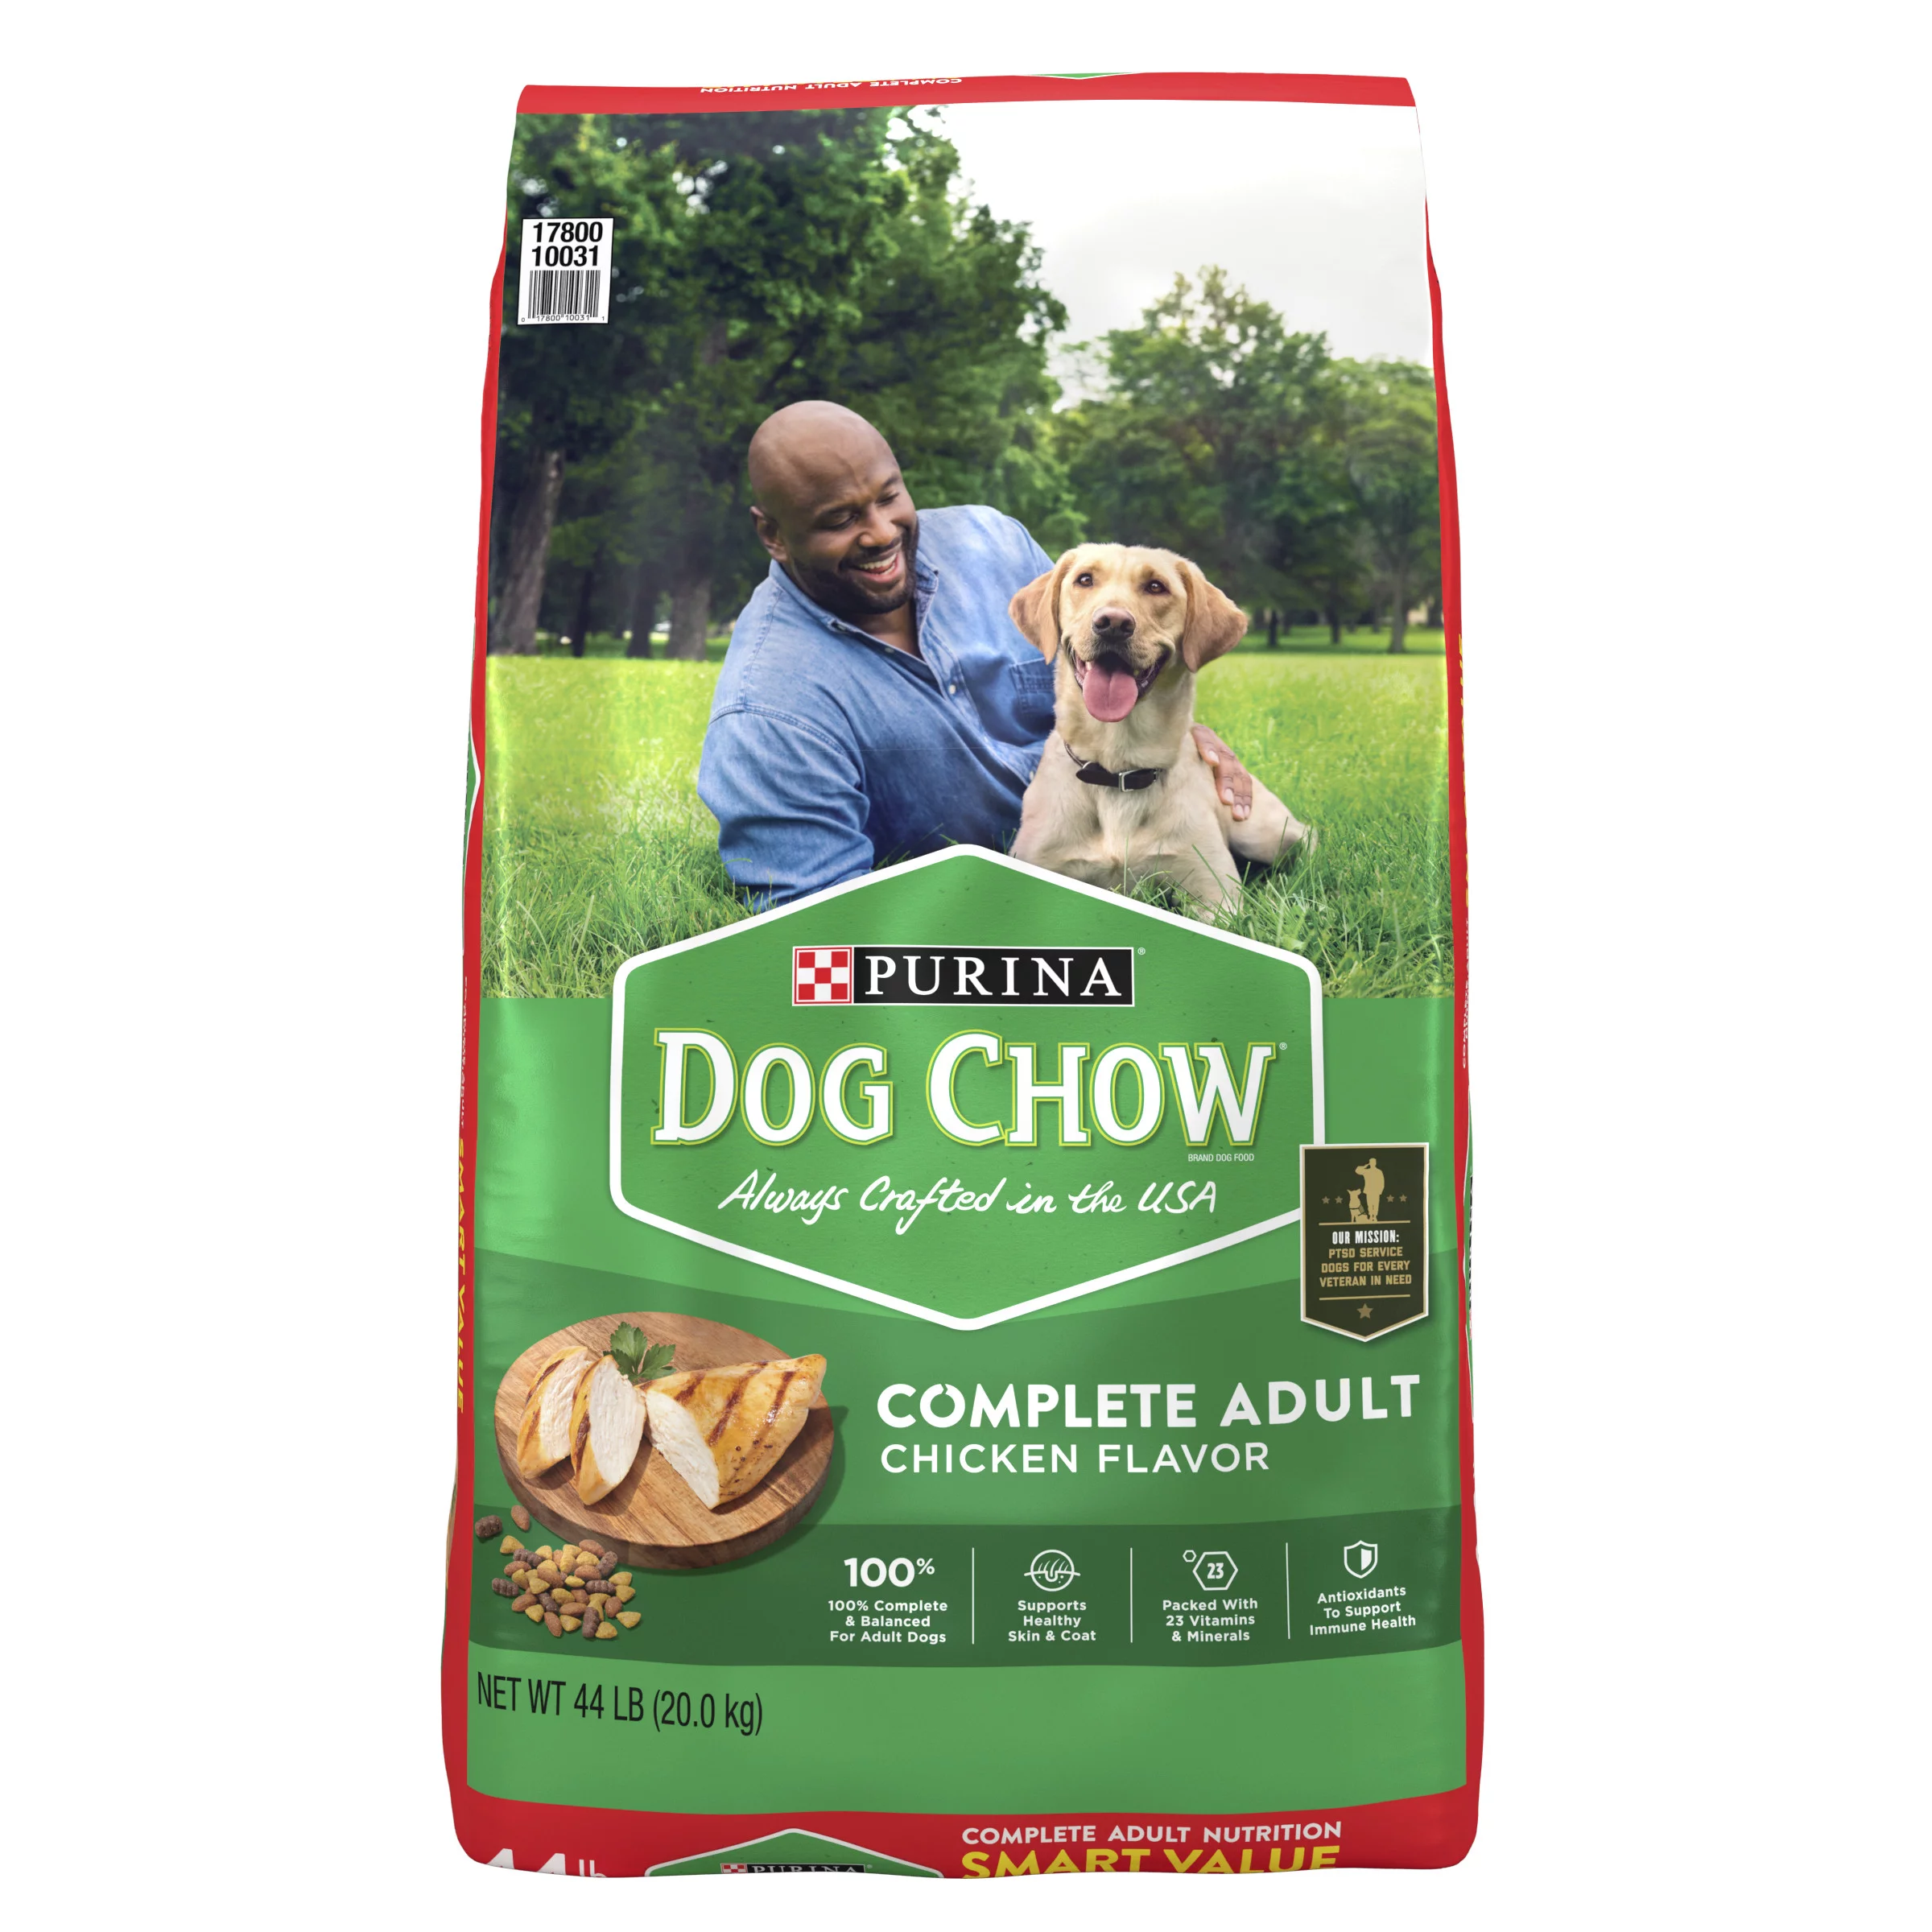 Purina Dog Chow Chicken Flavor Dry Dog Food, 44 lb Bag